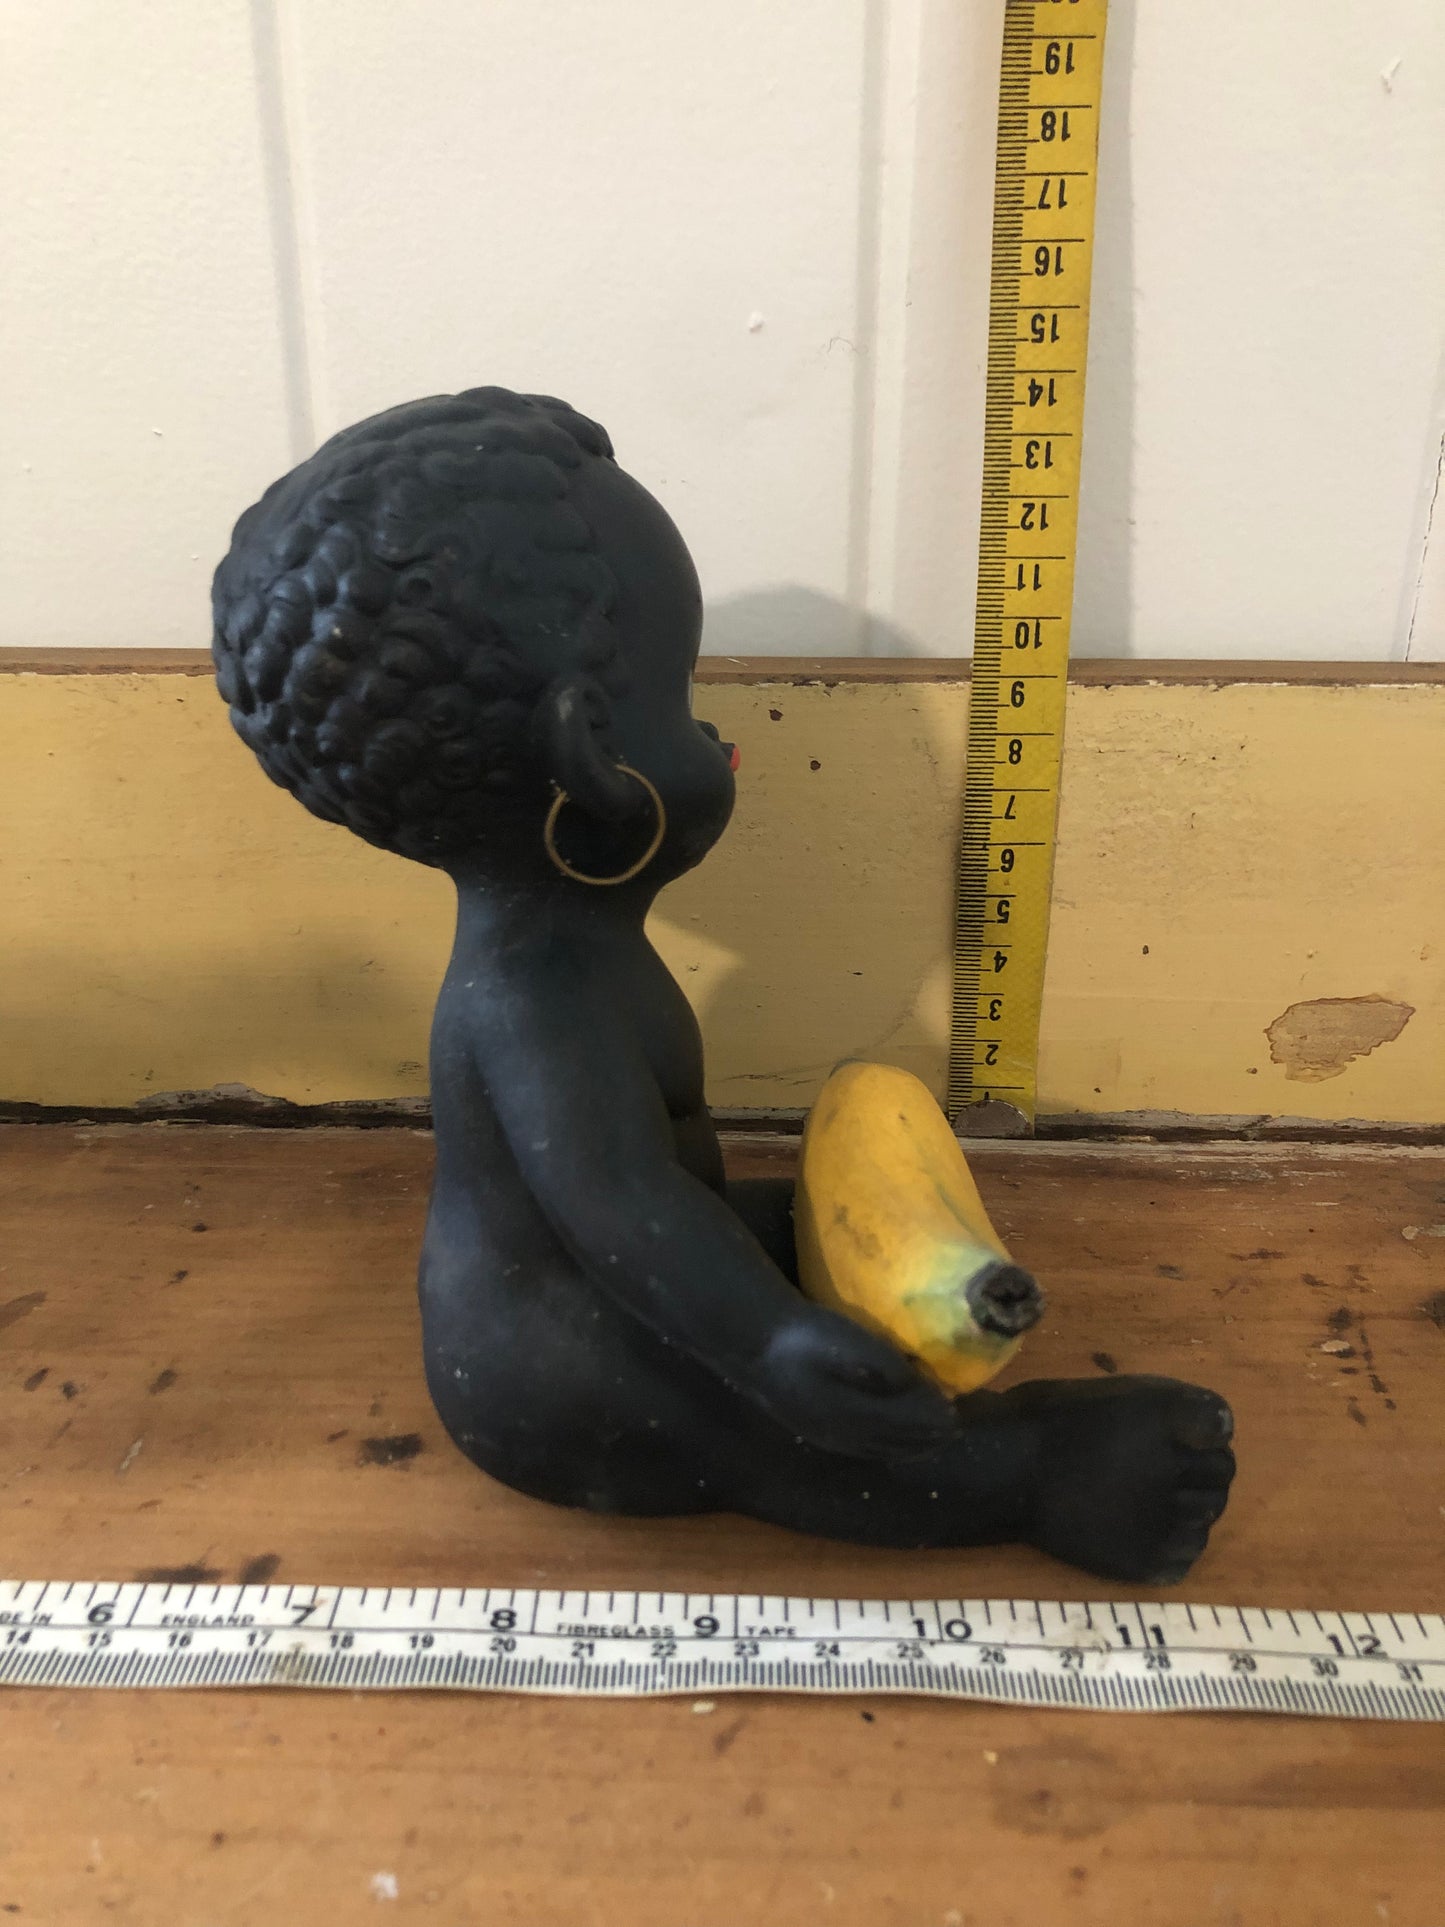 Baby with banana figurine. Black